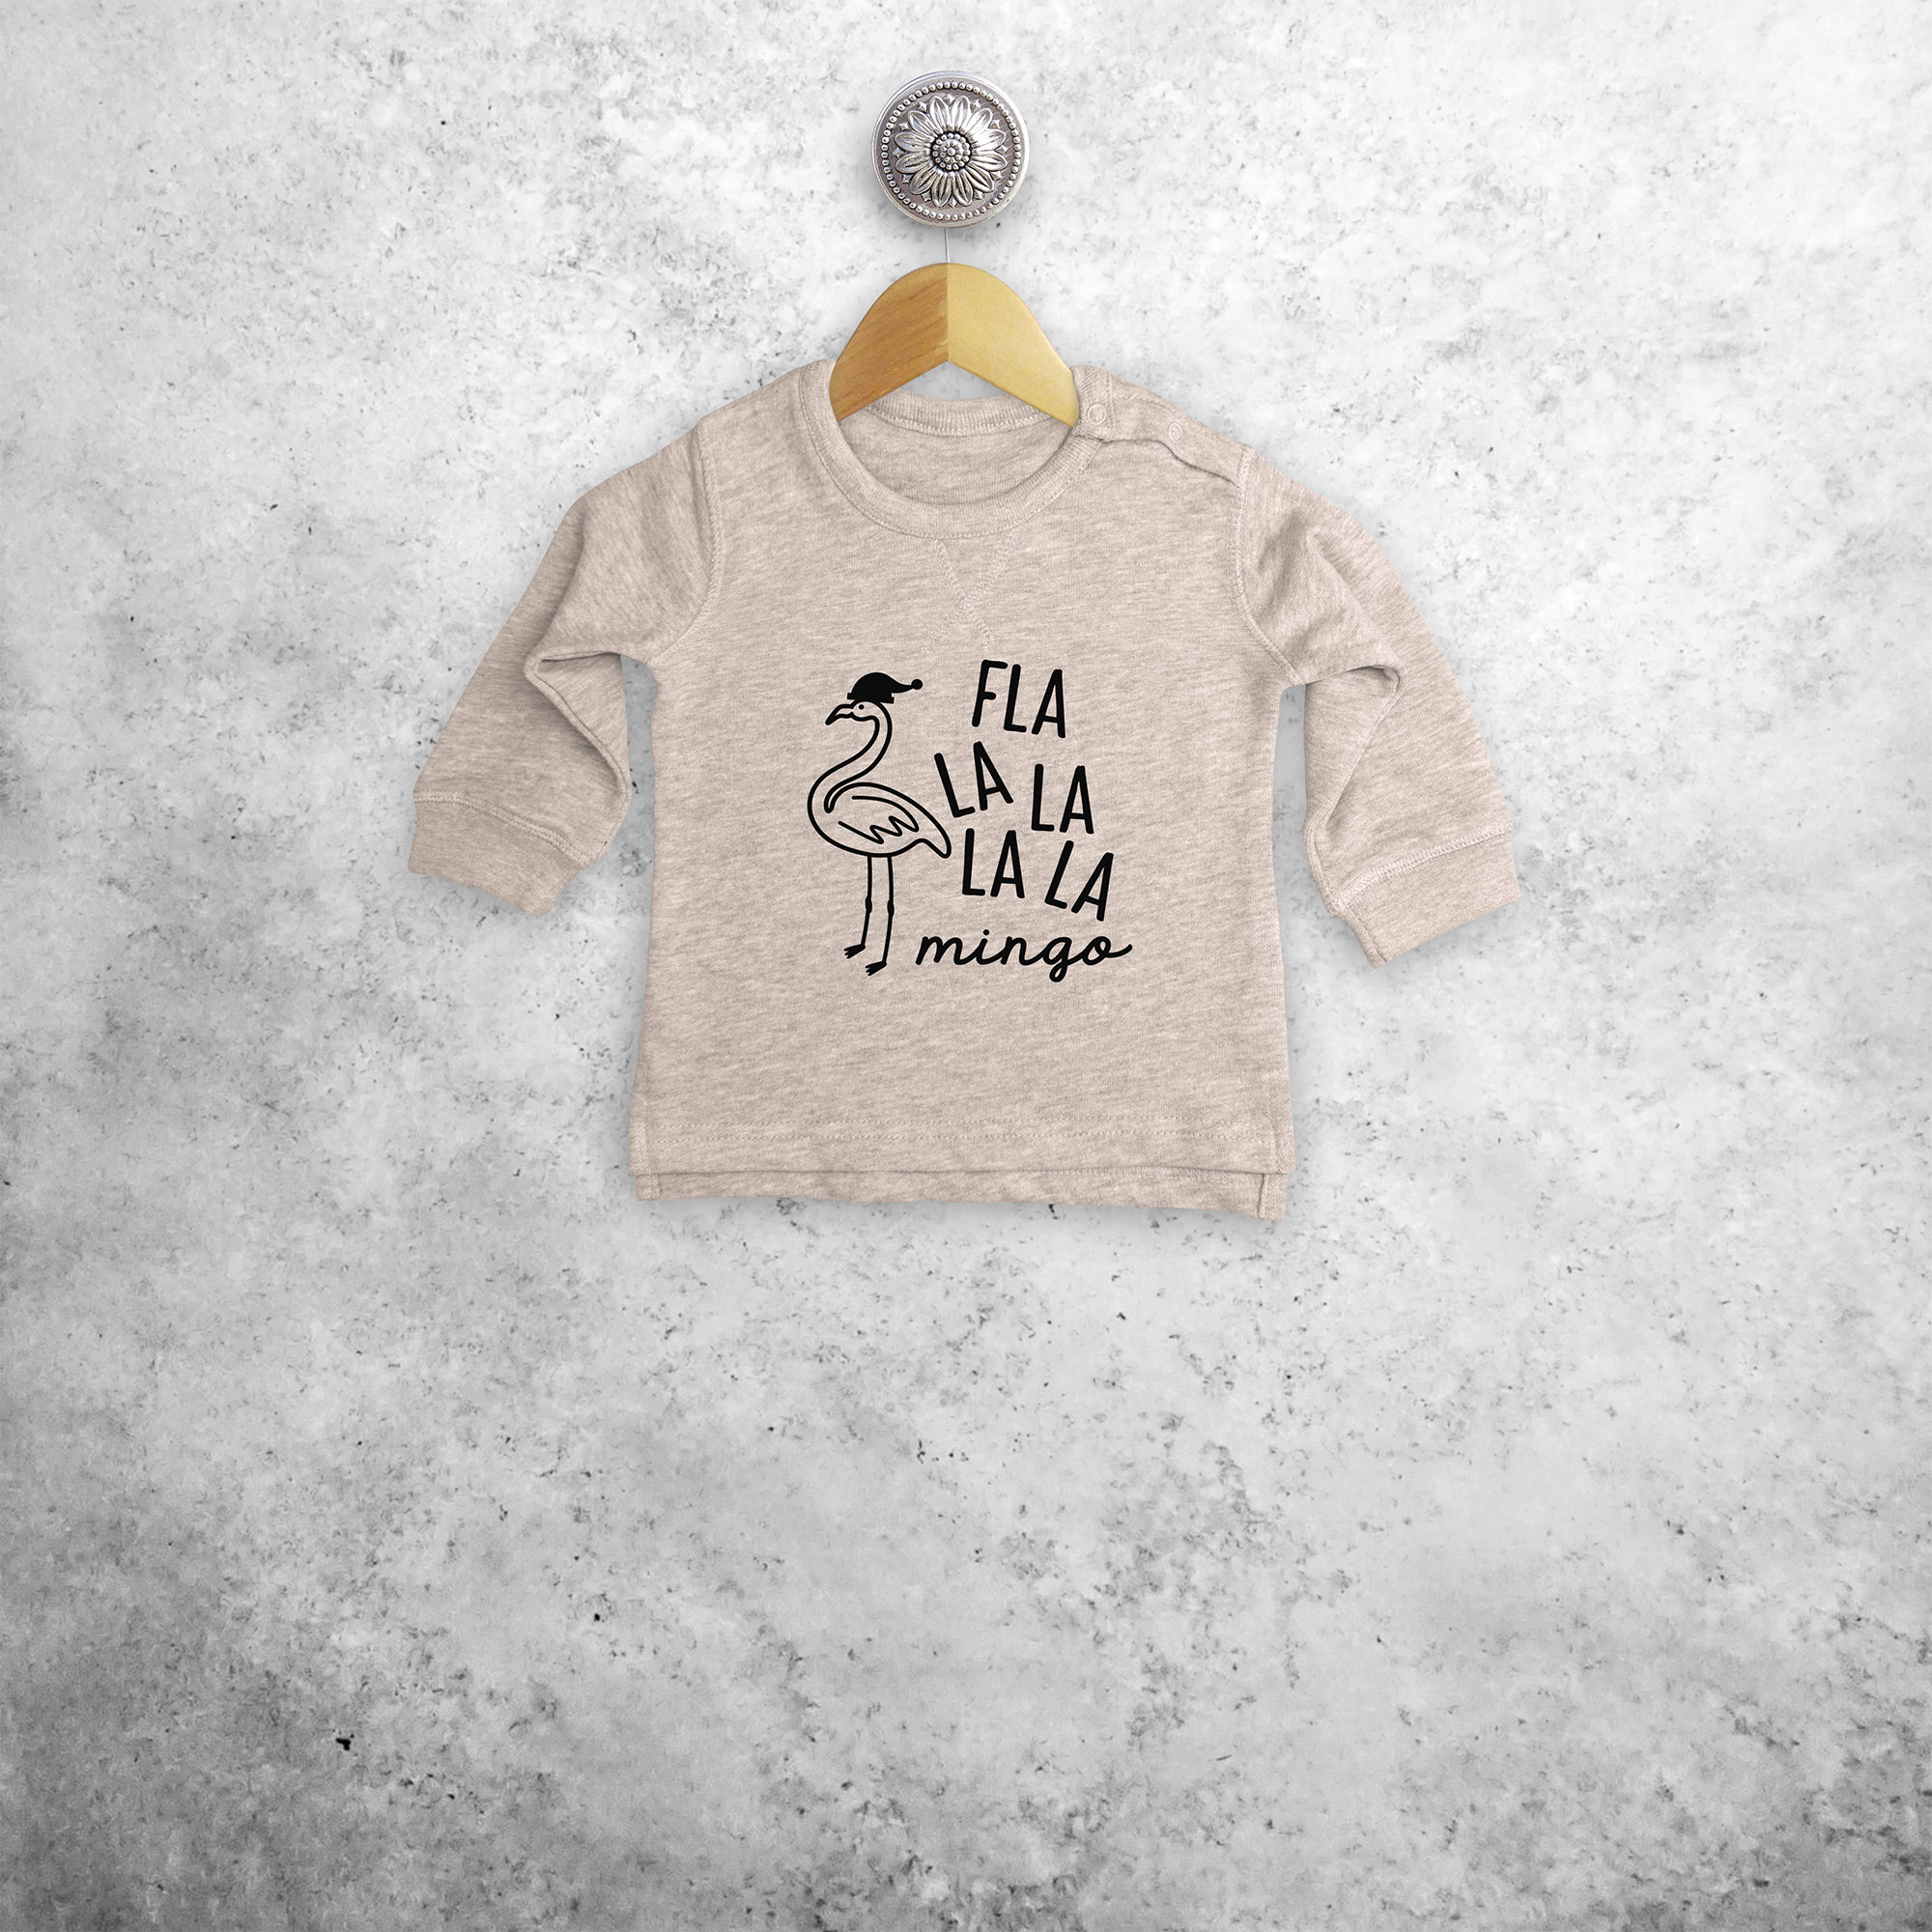 Baby or toddler sweater, with ‘Fla la la la la mingo’ print by KMLeon.